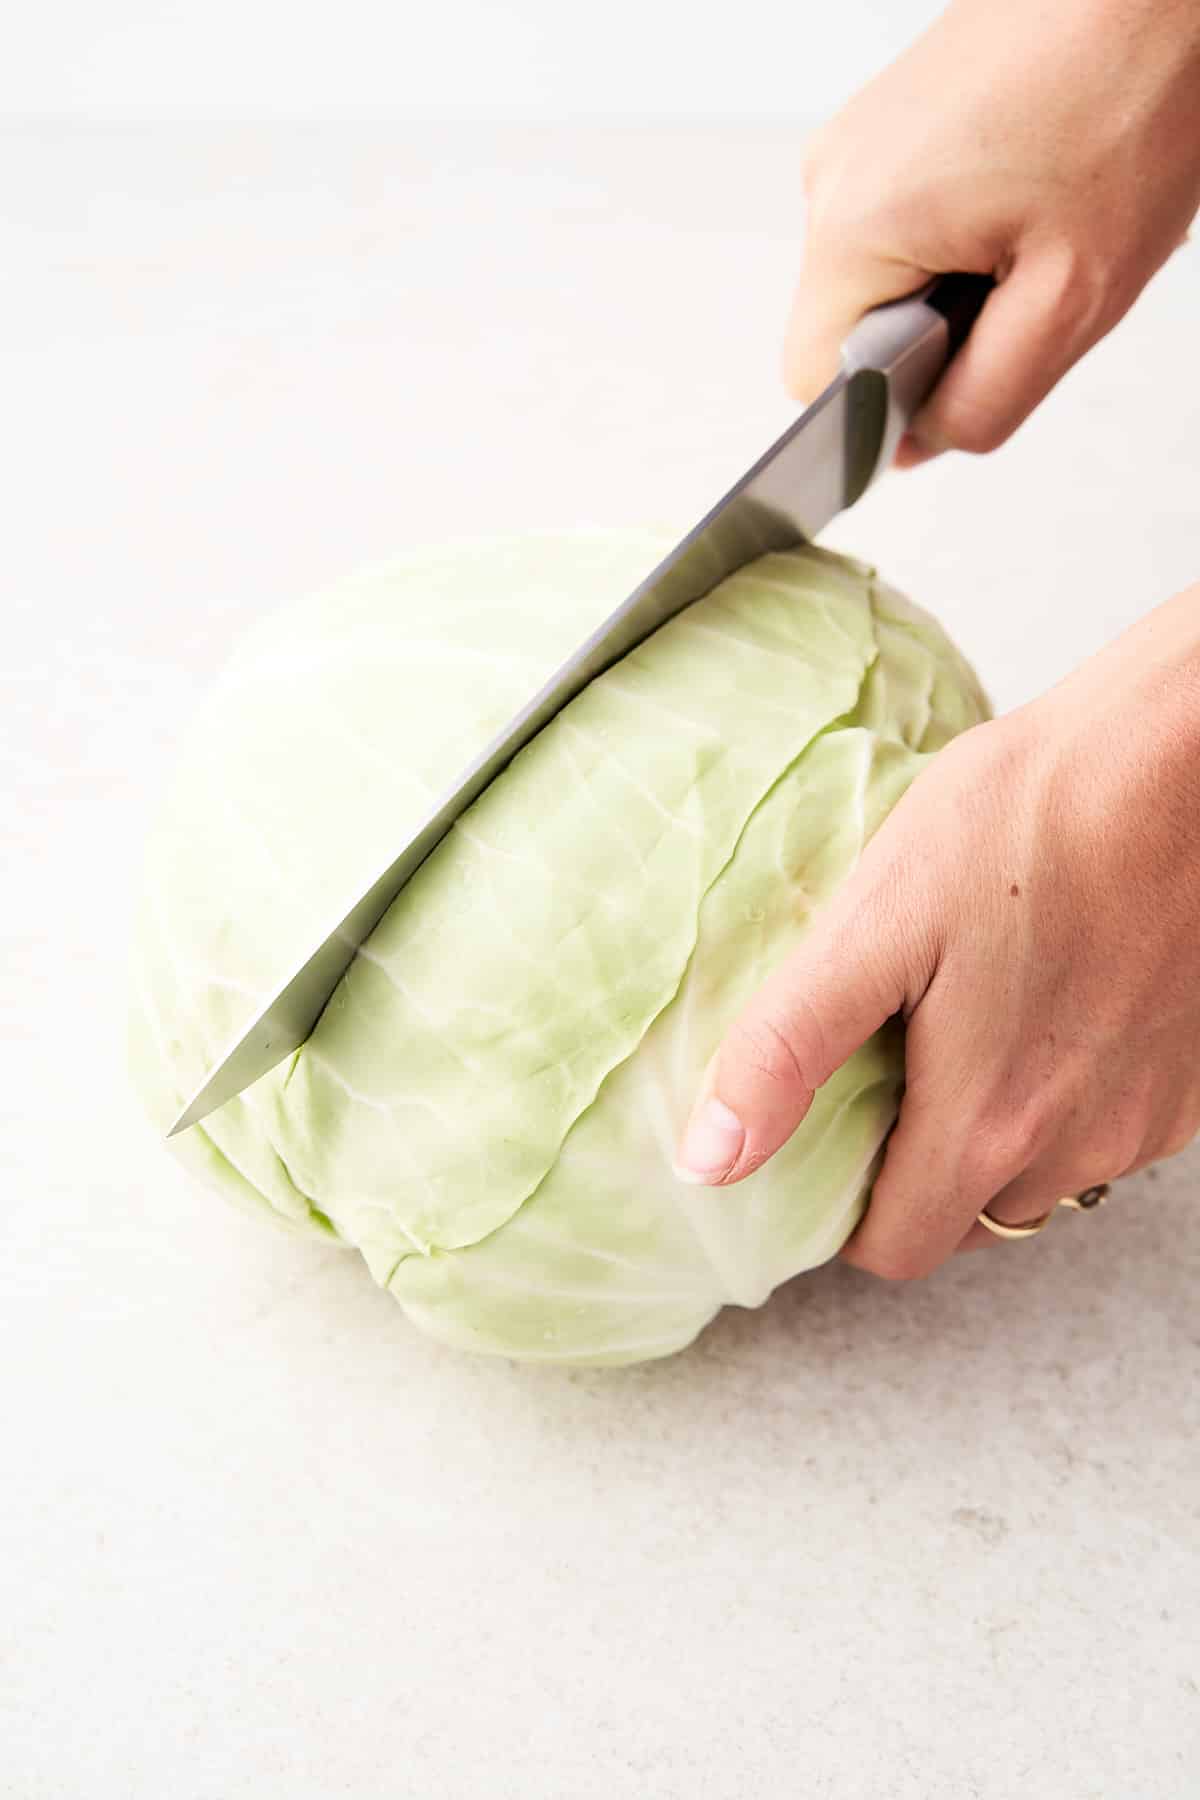 Cutting cabbage in half.